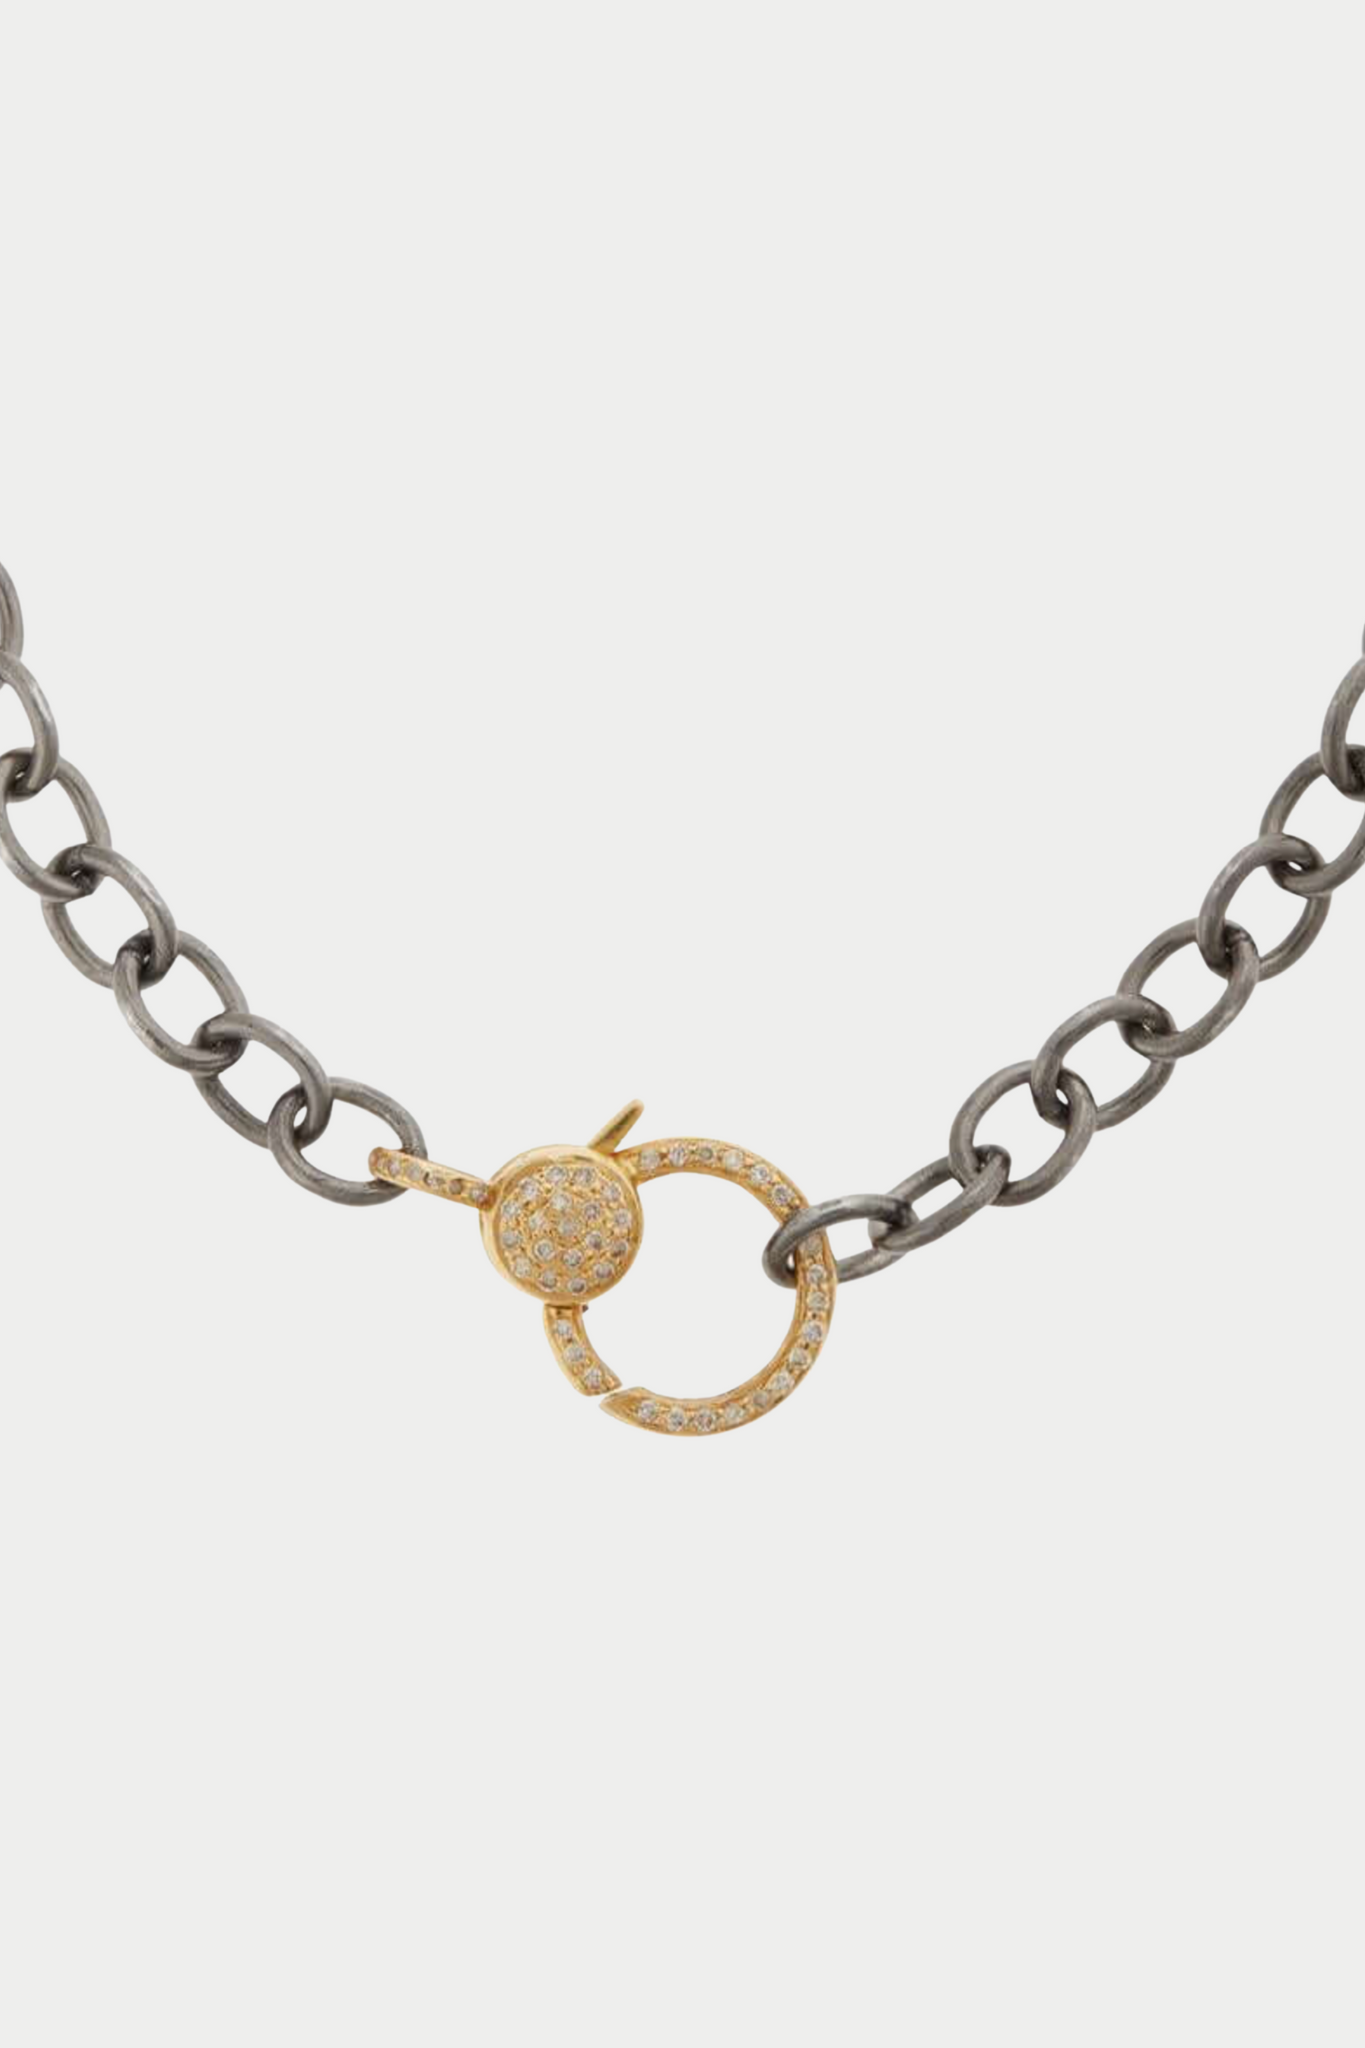 ILEANA MAKRI - Diamond Lock Round Link Chain Bracelet, White Diamonds